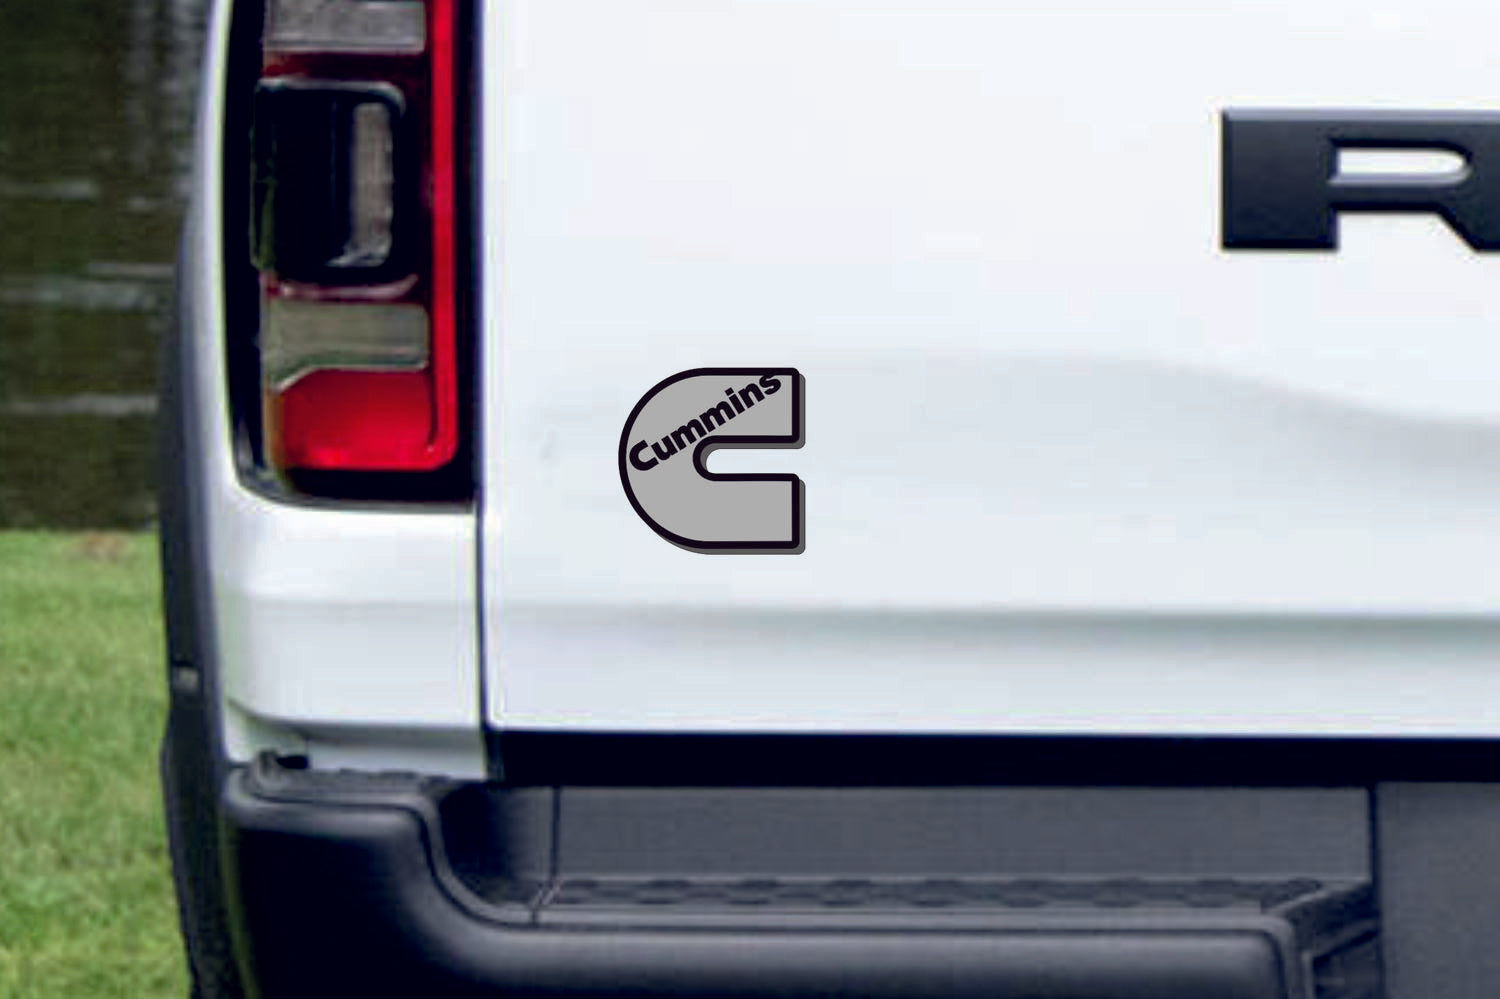 Dodge tailgate trunk rear emblem with Cummins logo (type 2) - decoinfabric